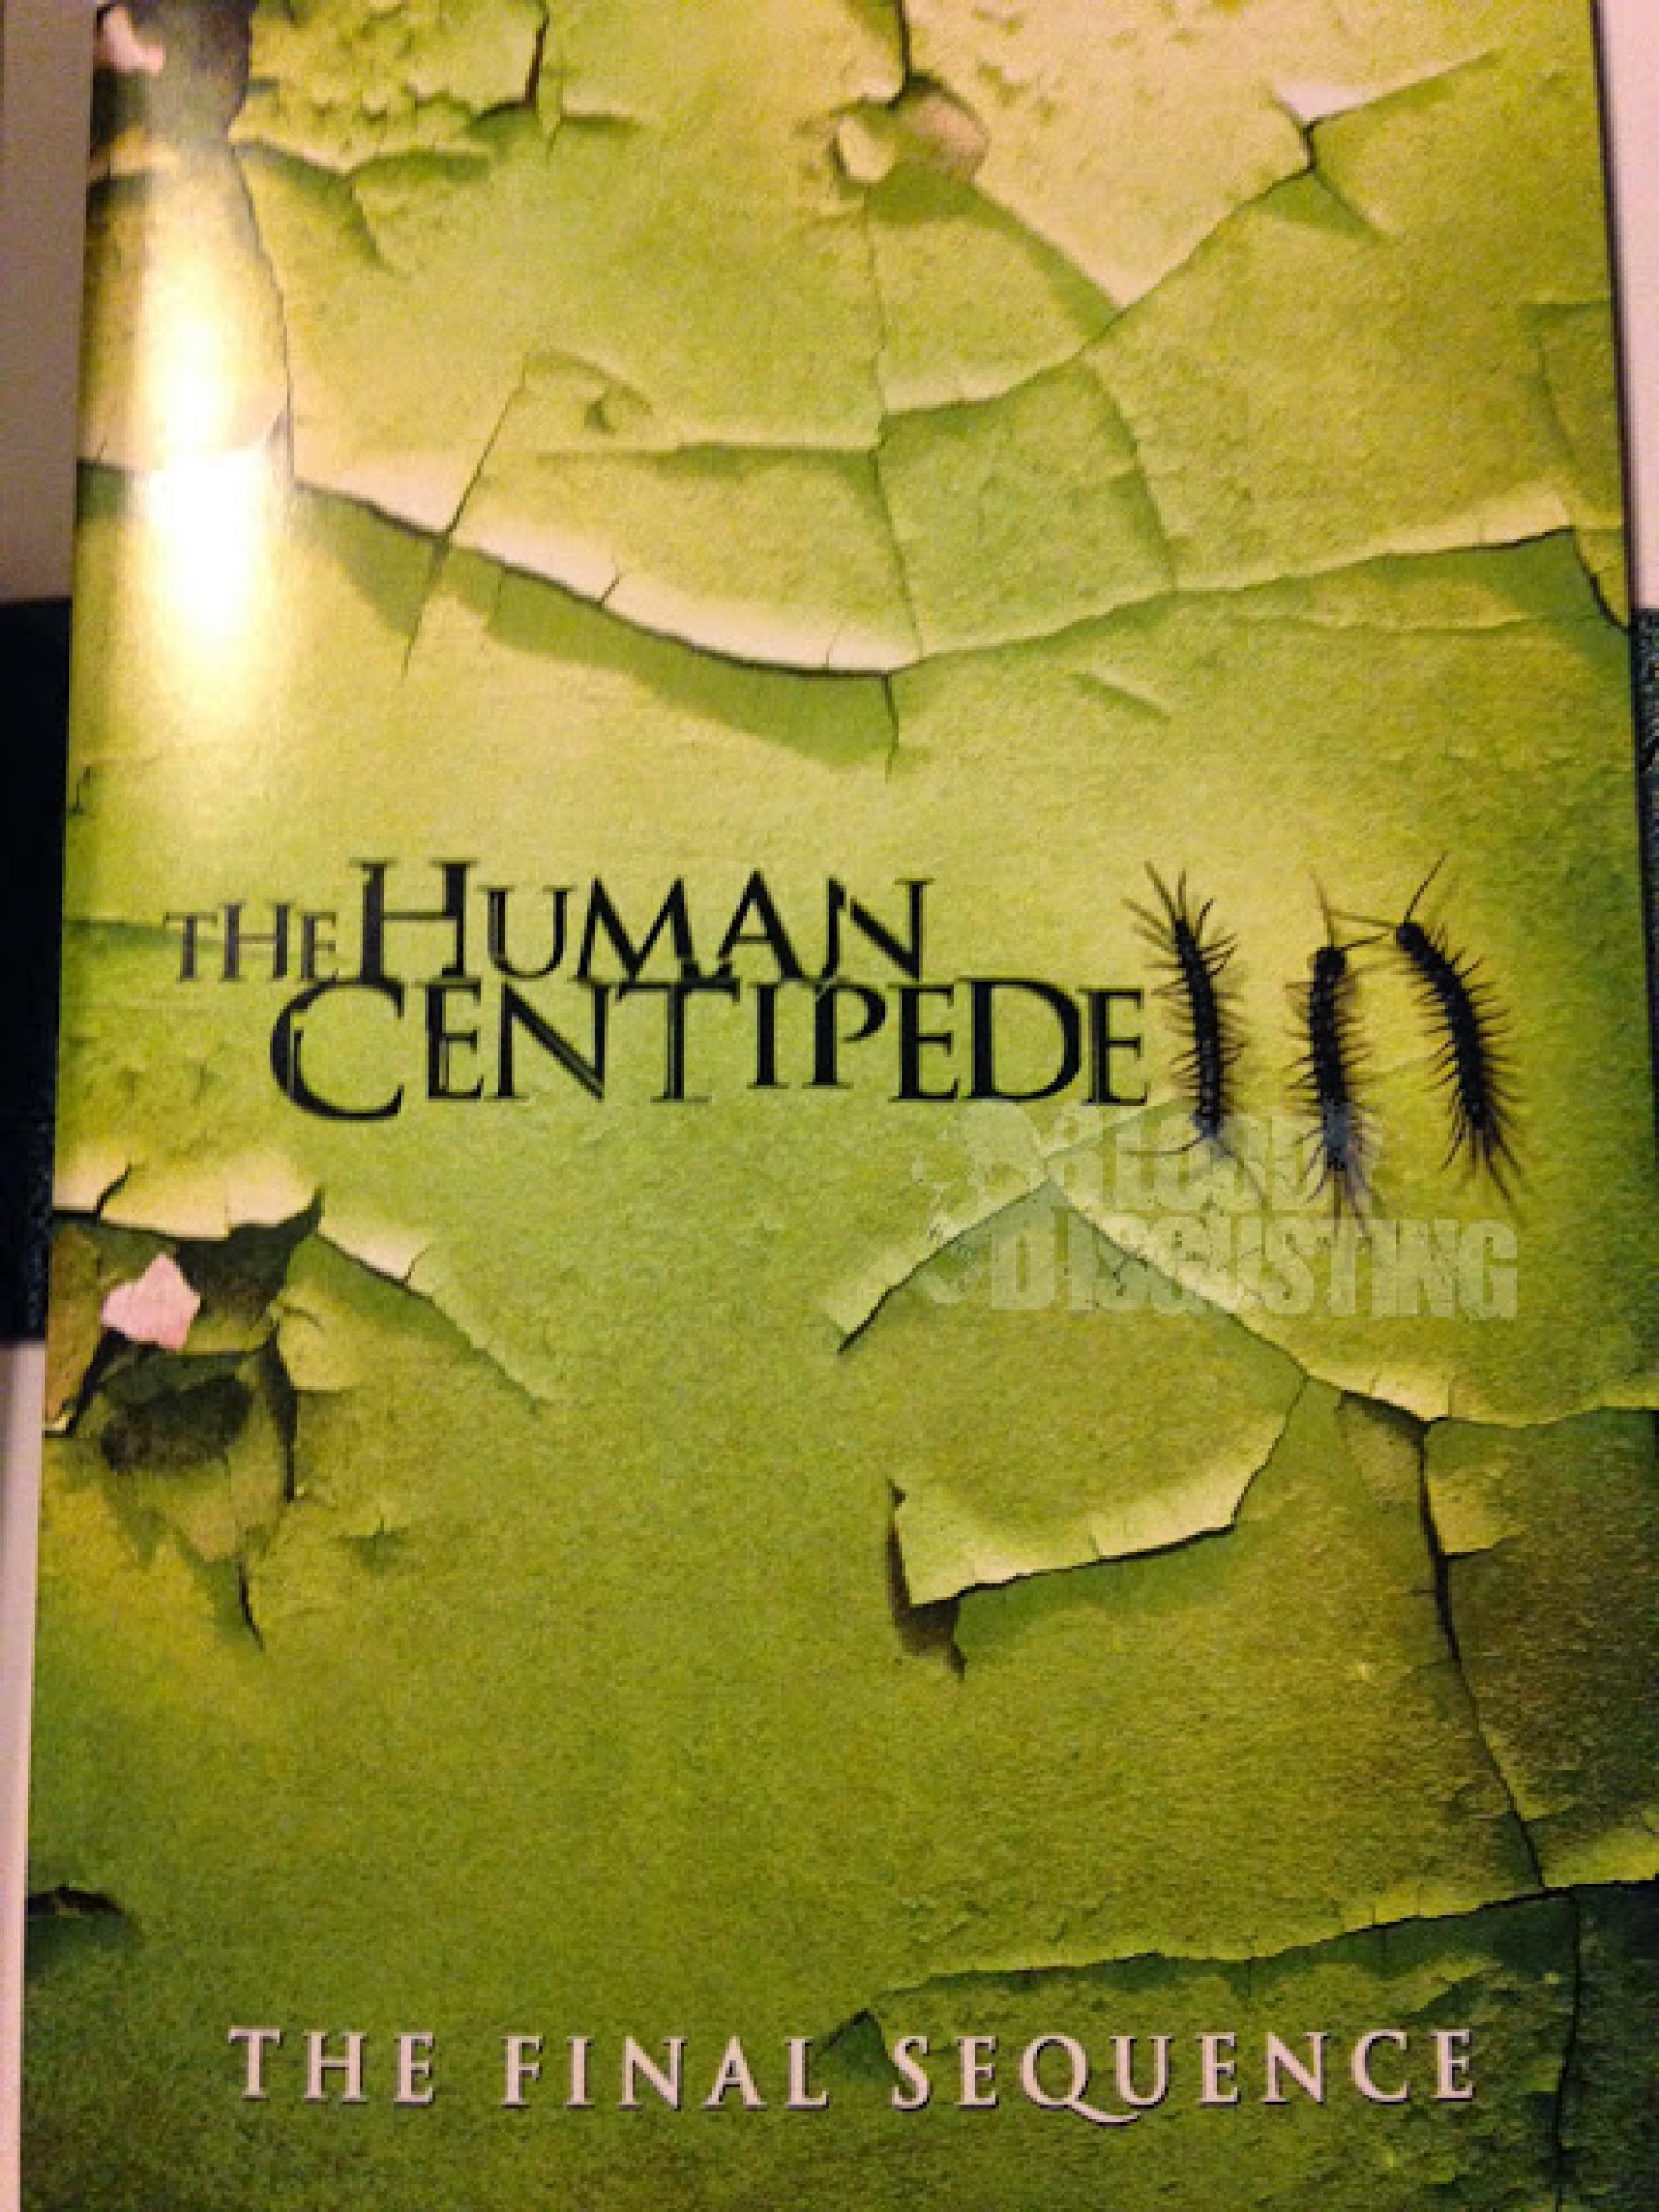 Tuesday Trailer #03: The Human Centipede 3